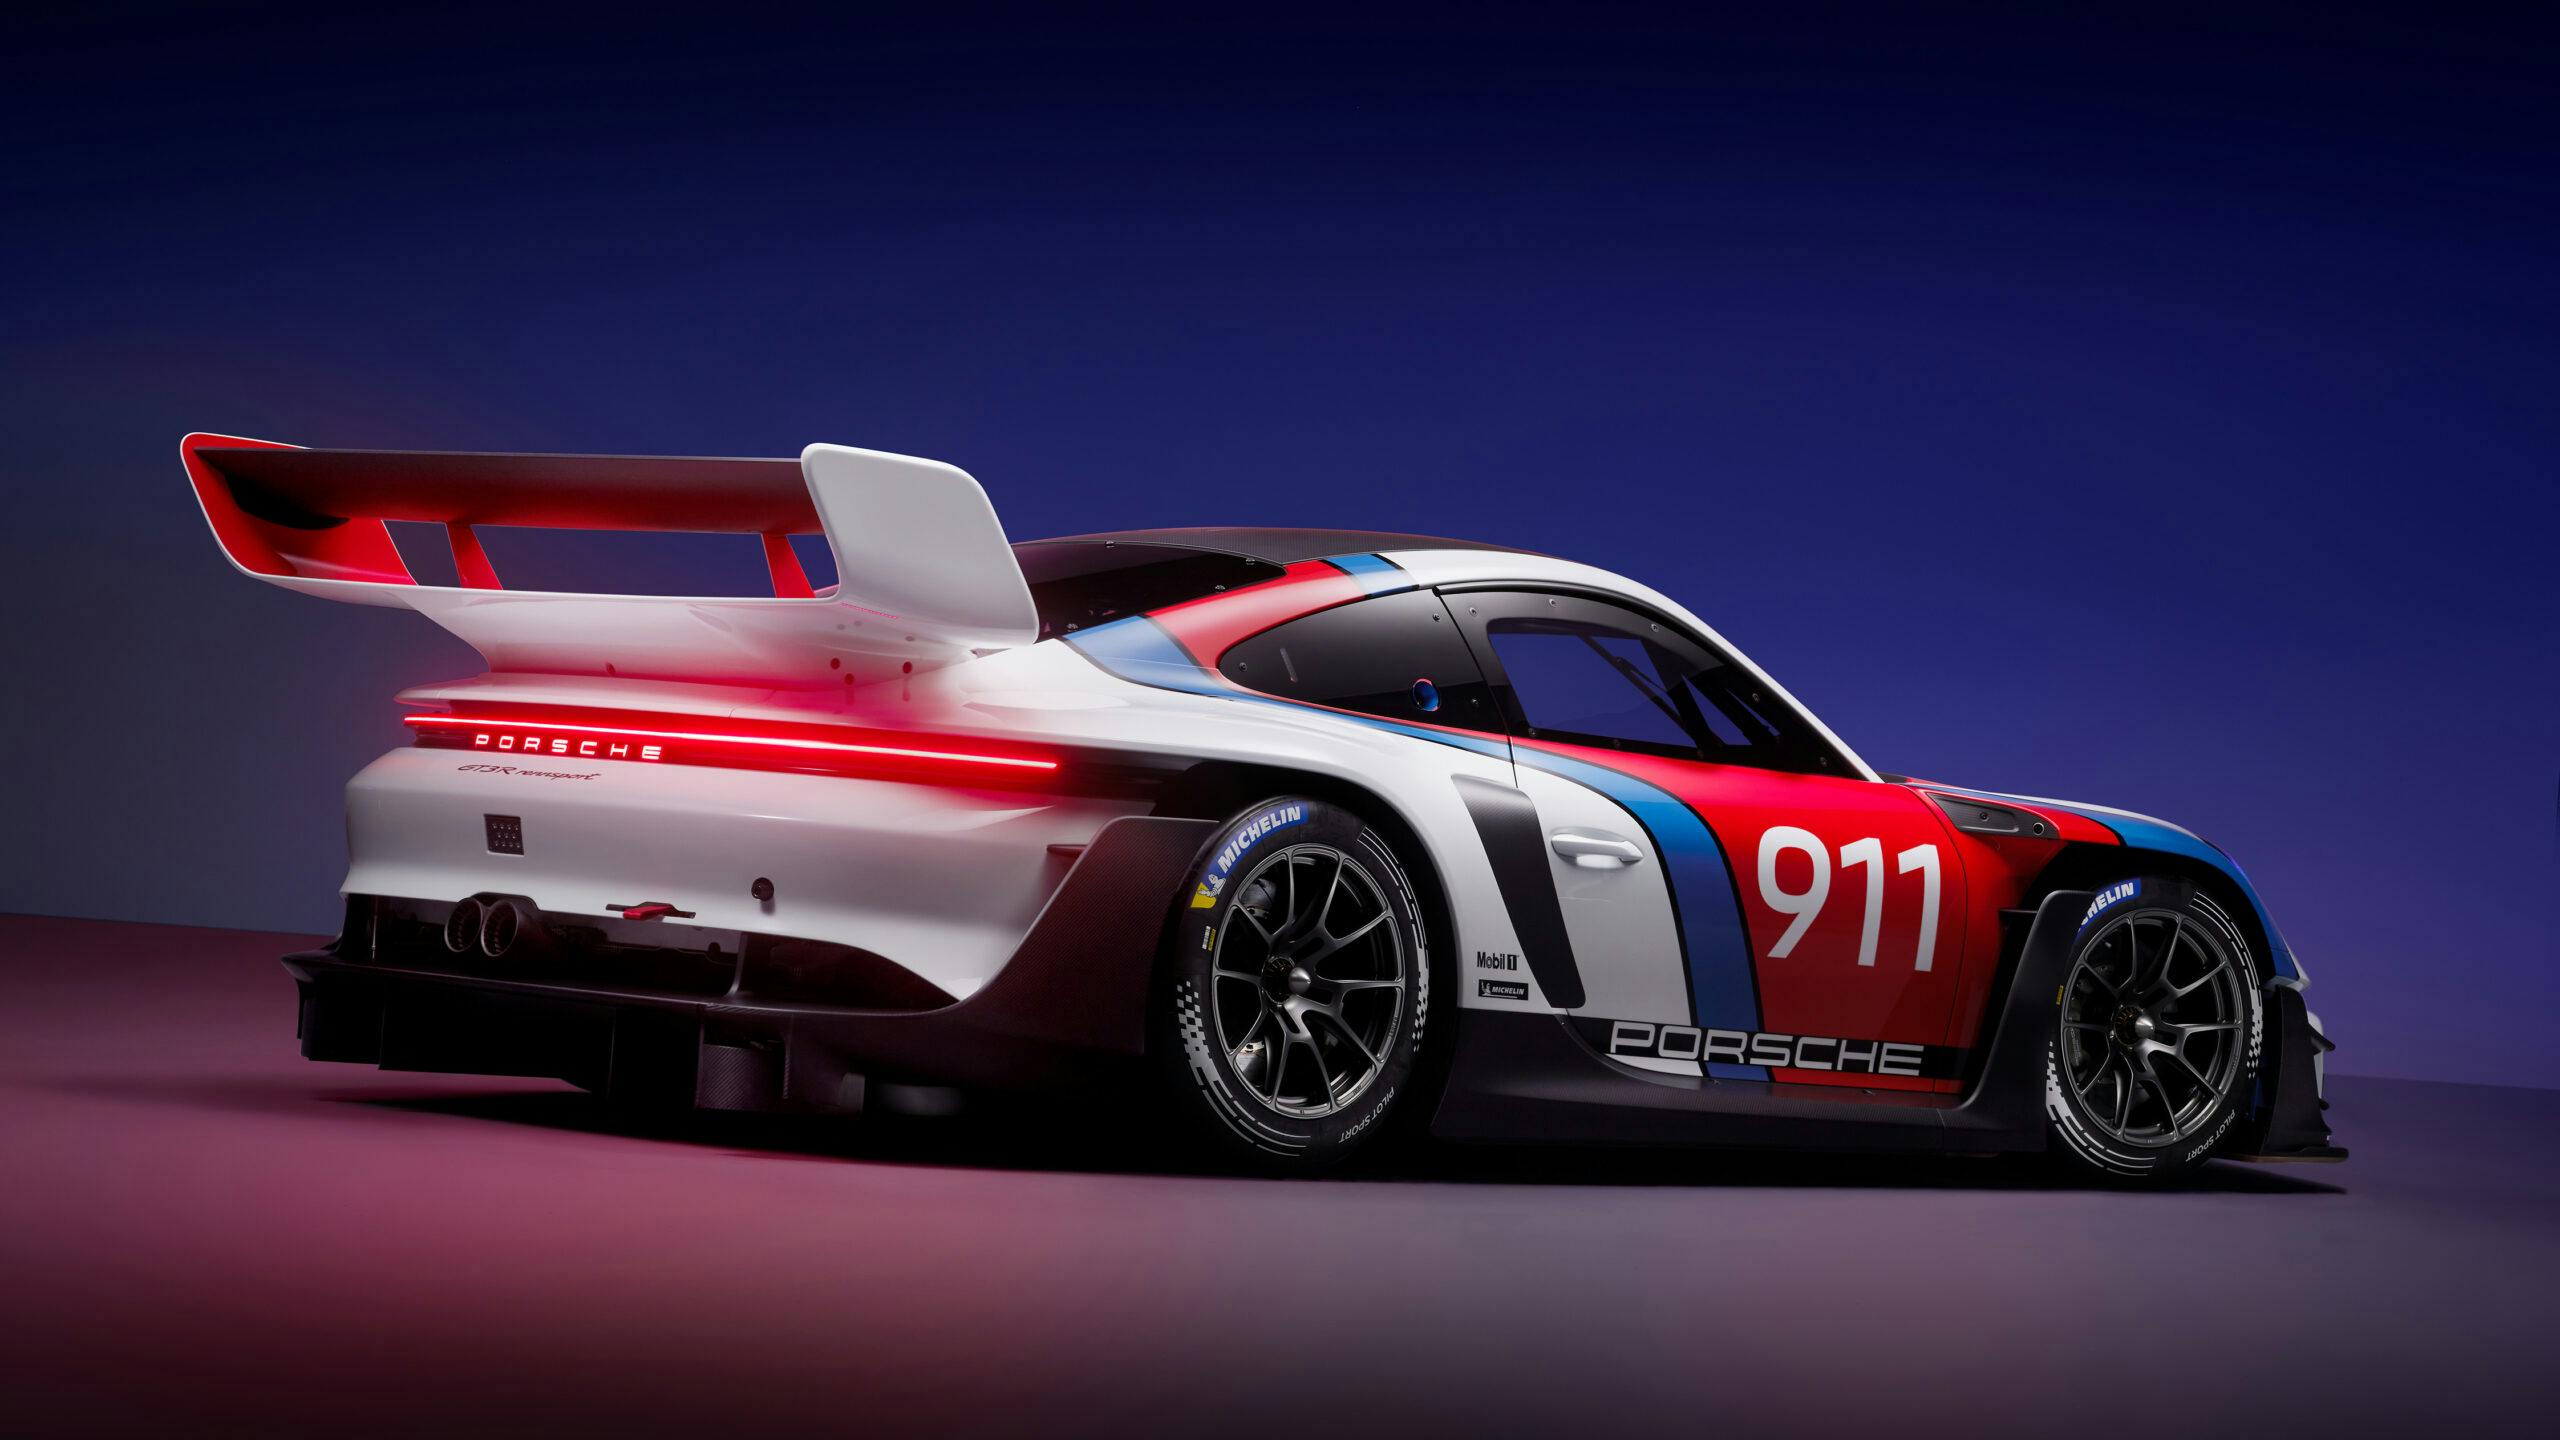 Porsche 911 GT3 R rennsport rear 3-4